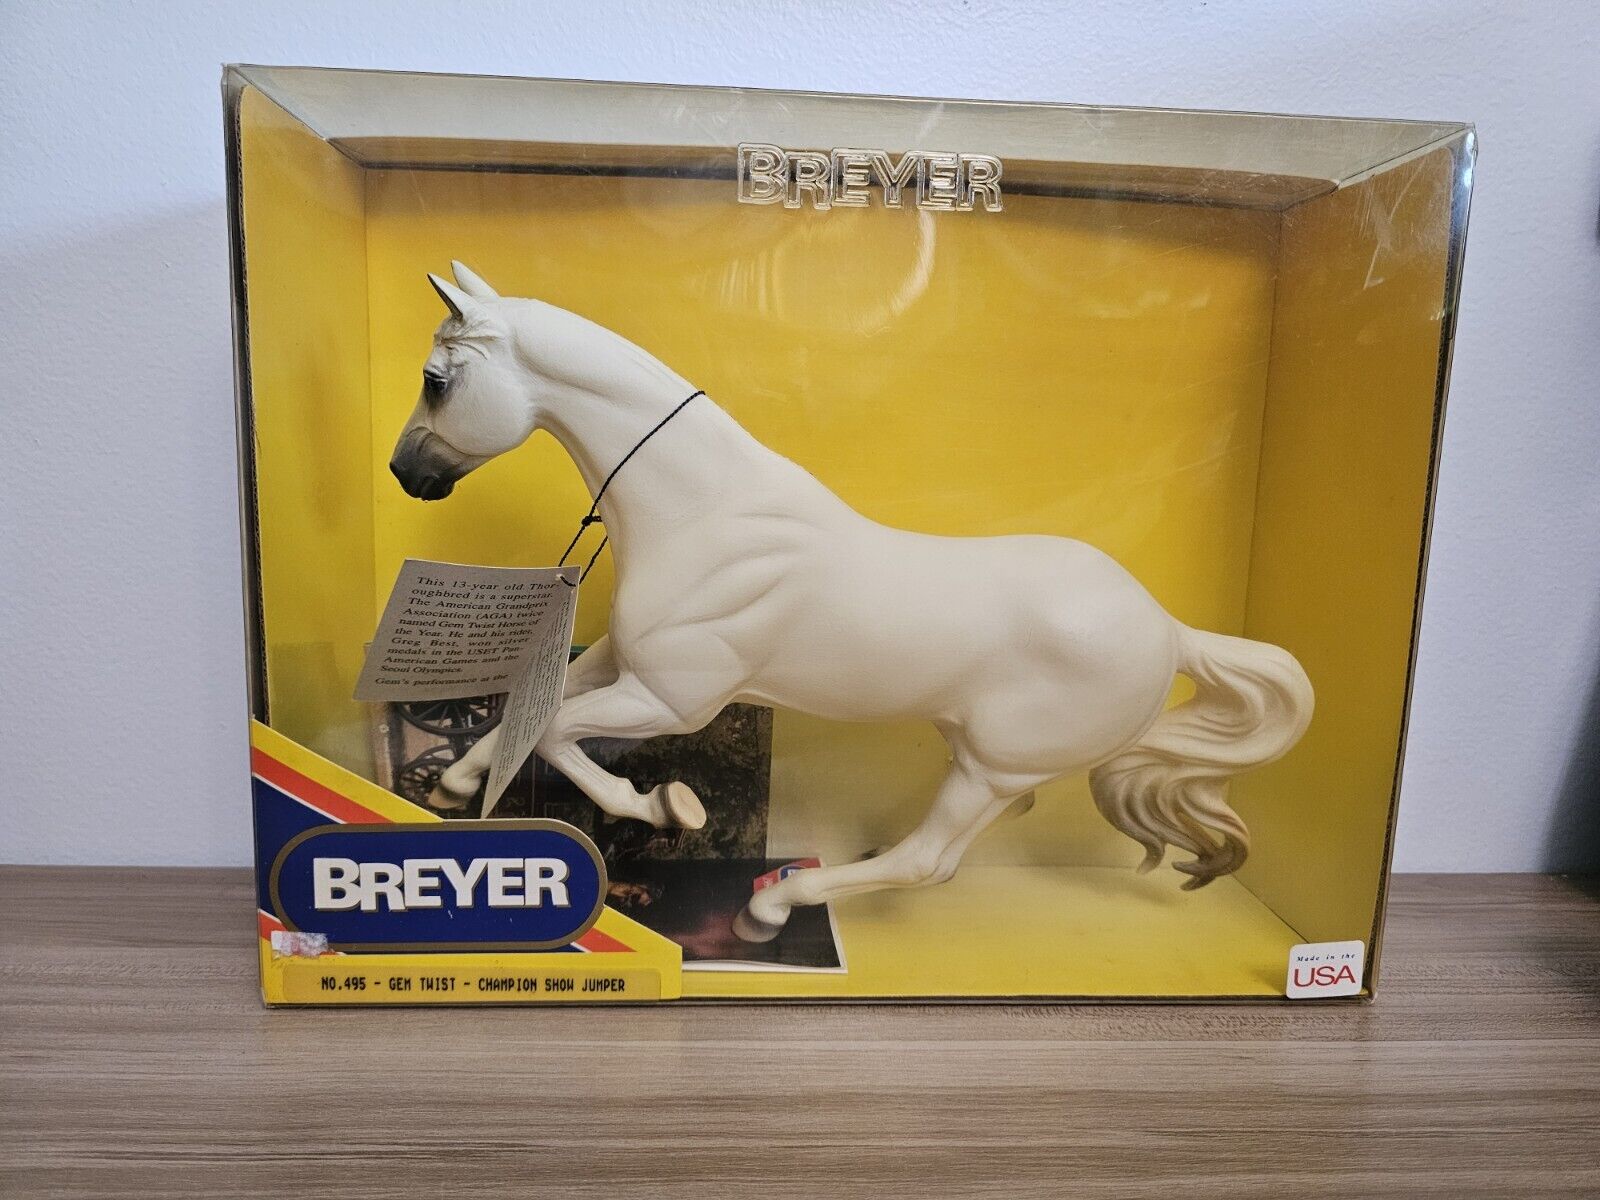 Vintage Breyer Horse #495 Gem Twist Champion Olympic Show Jumper Alabaster